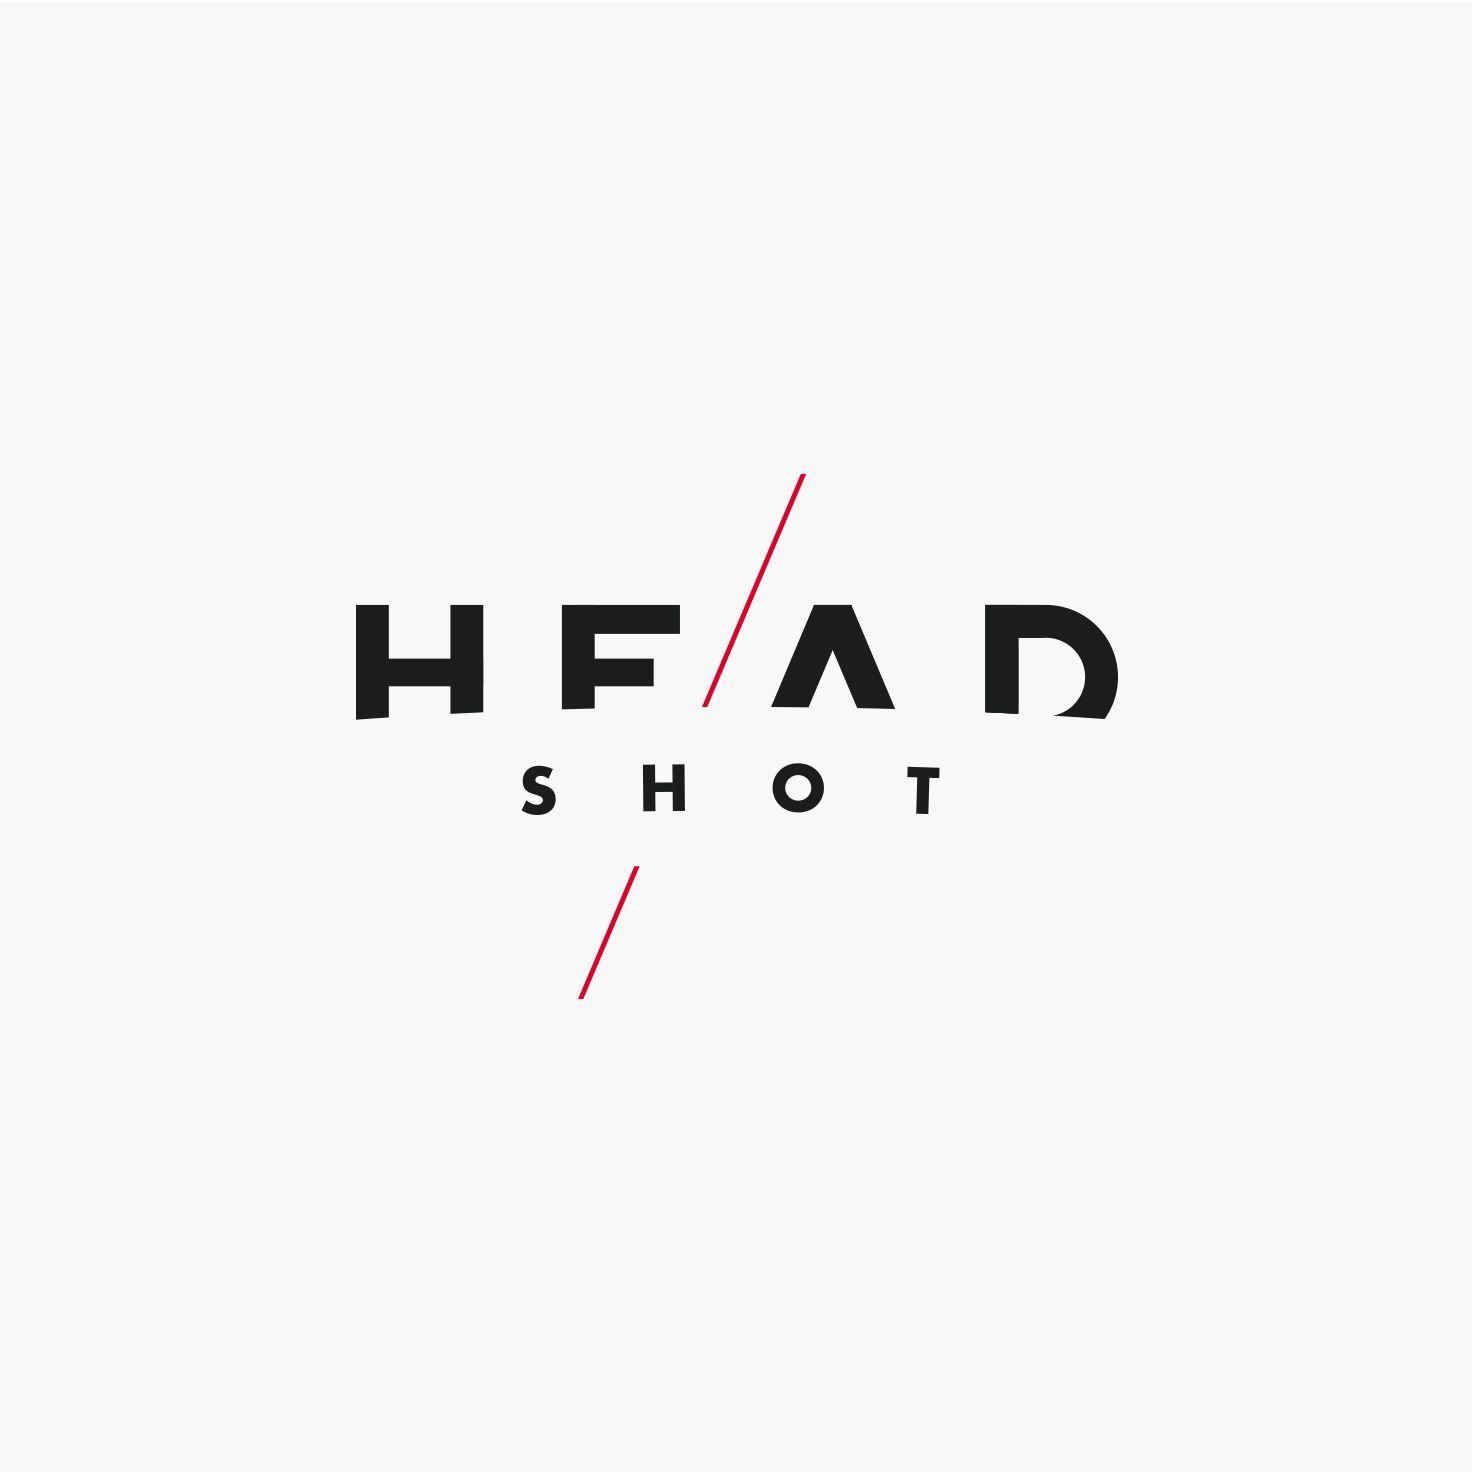 Headshot Logo - Pin by Svecc Design on Logo | Hair salon logos, Hairdresser logo ...